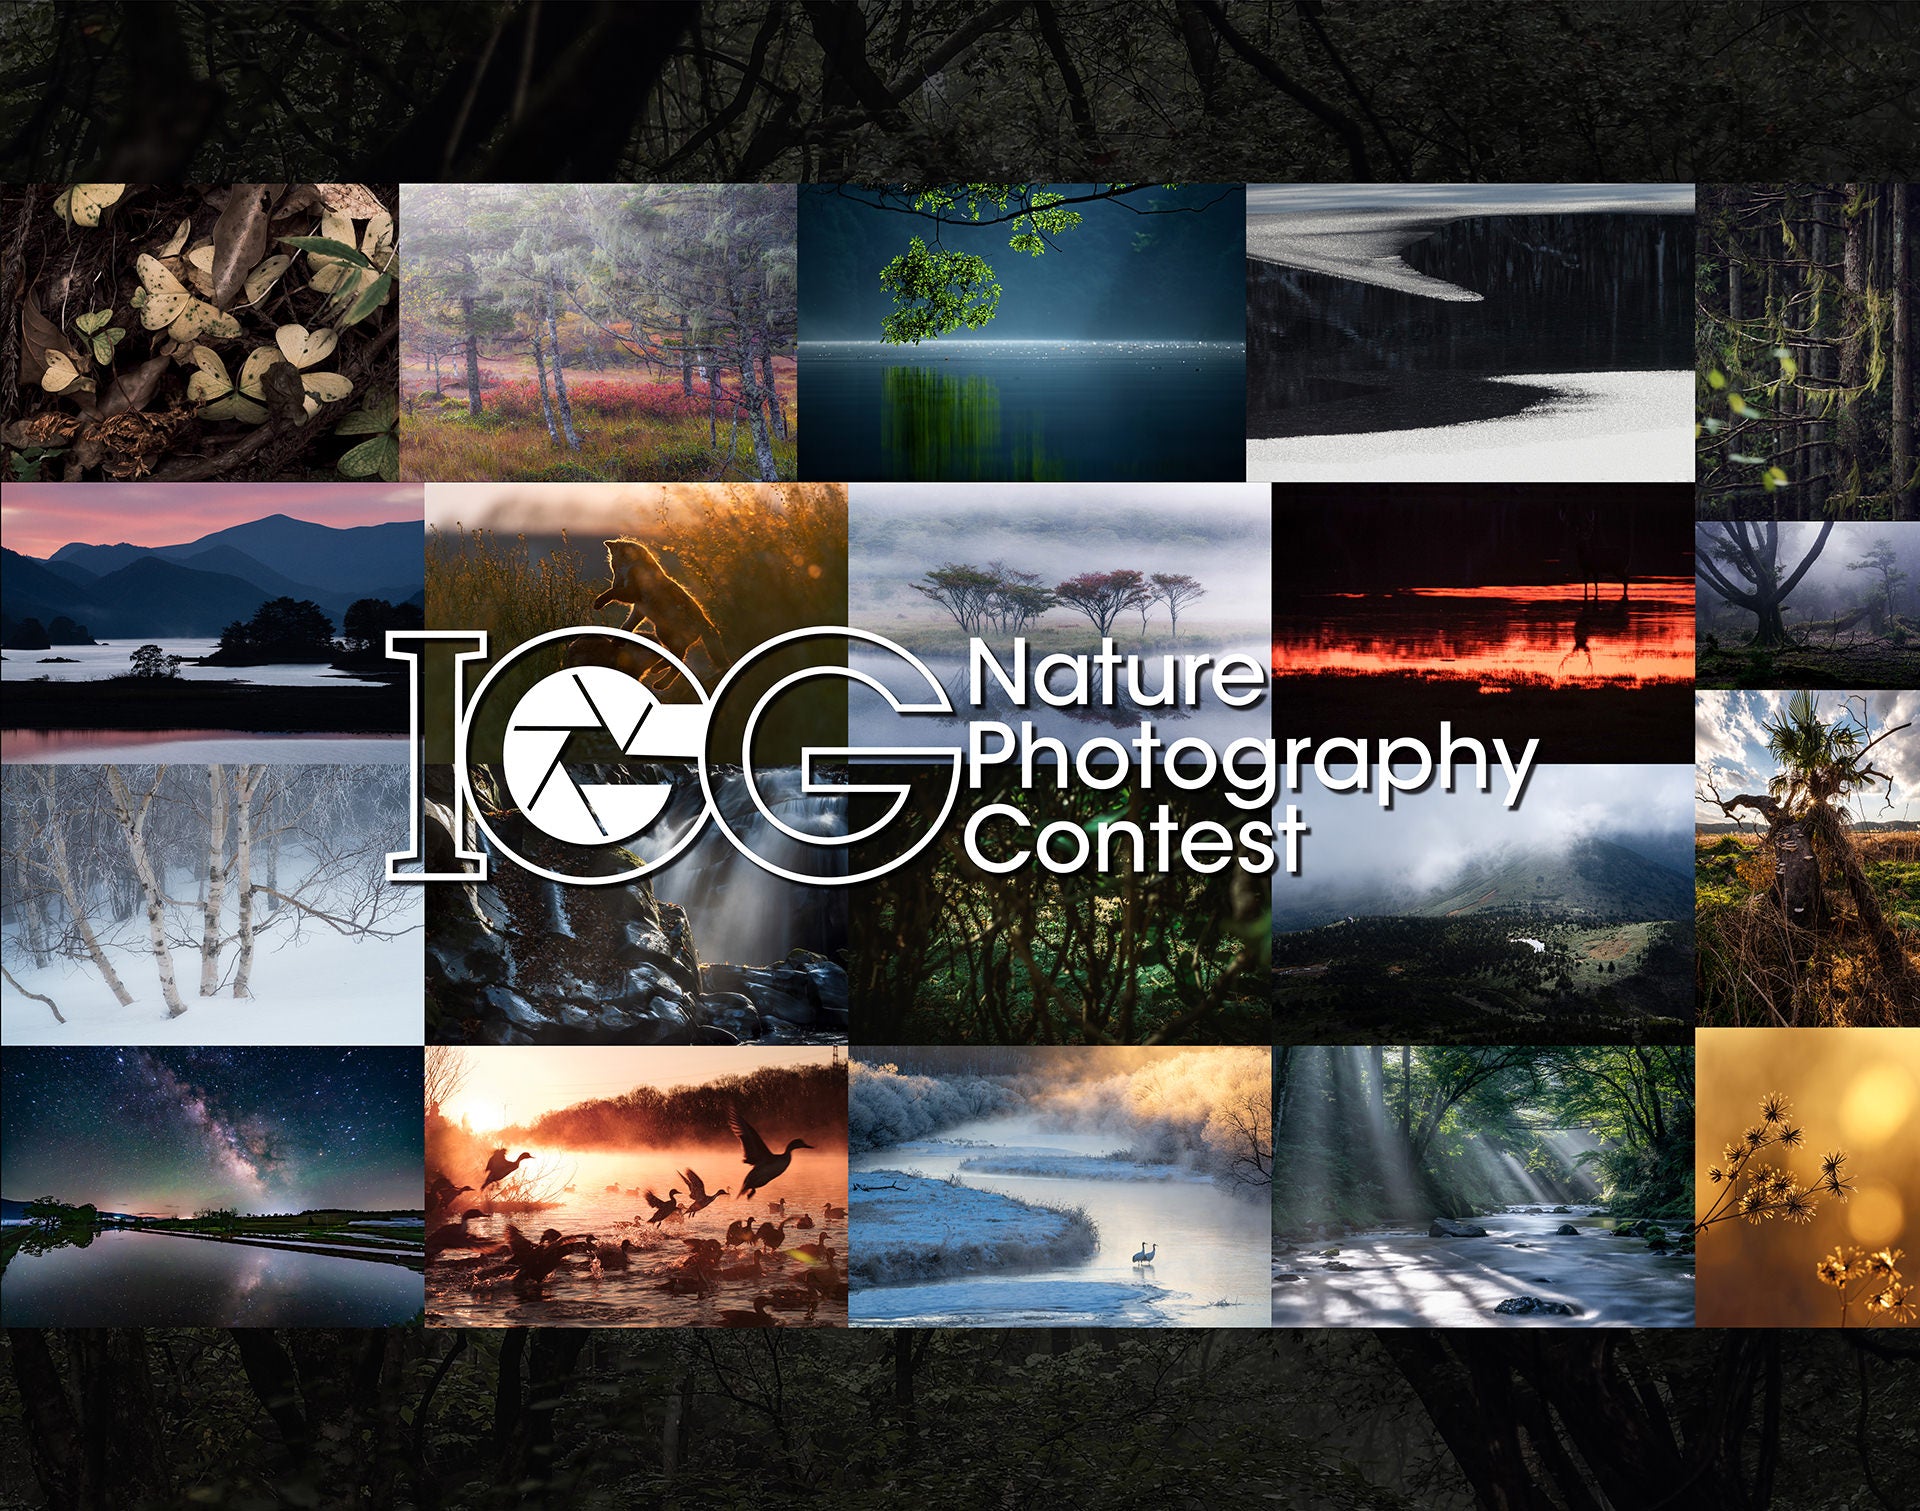 IGG-Nature Photography Contest